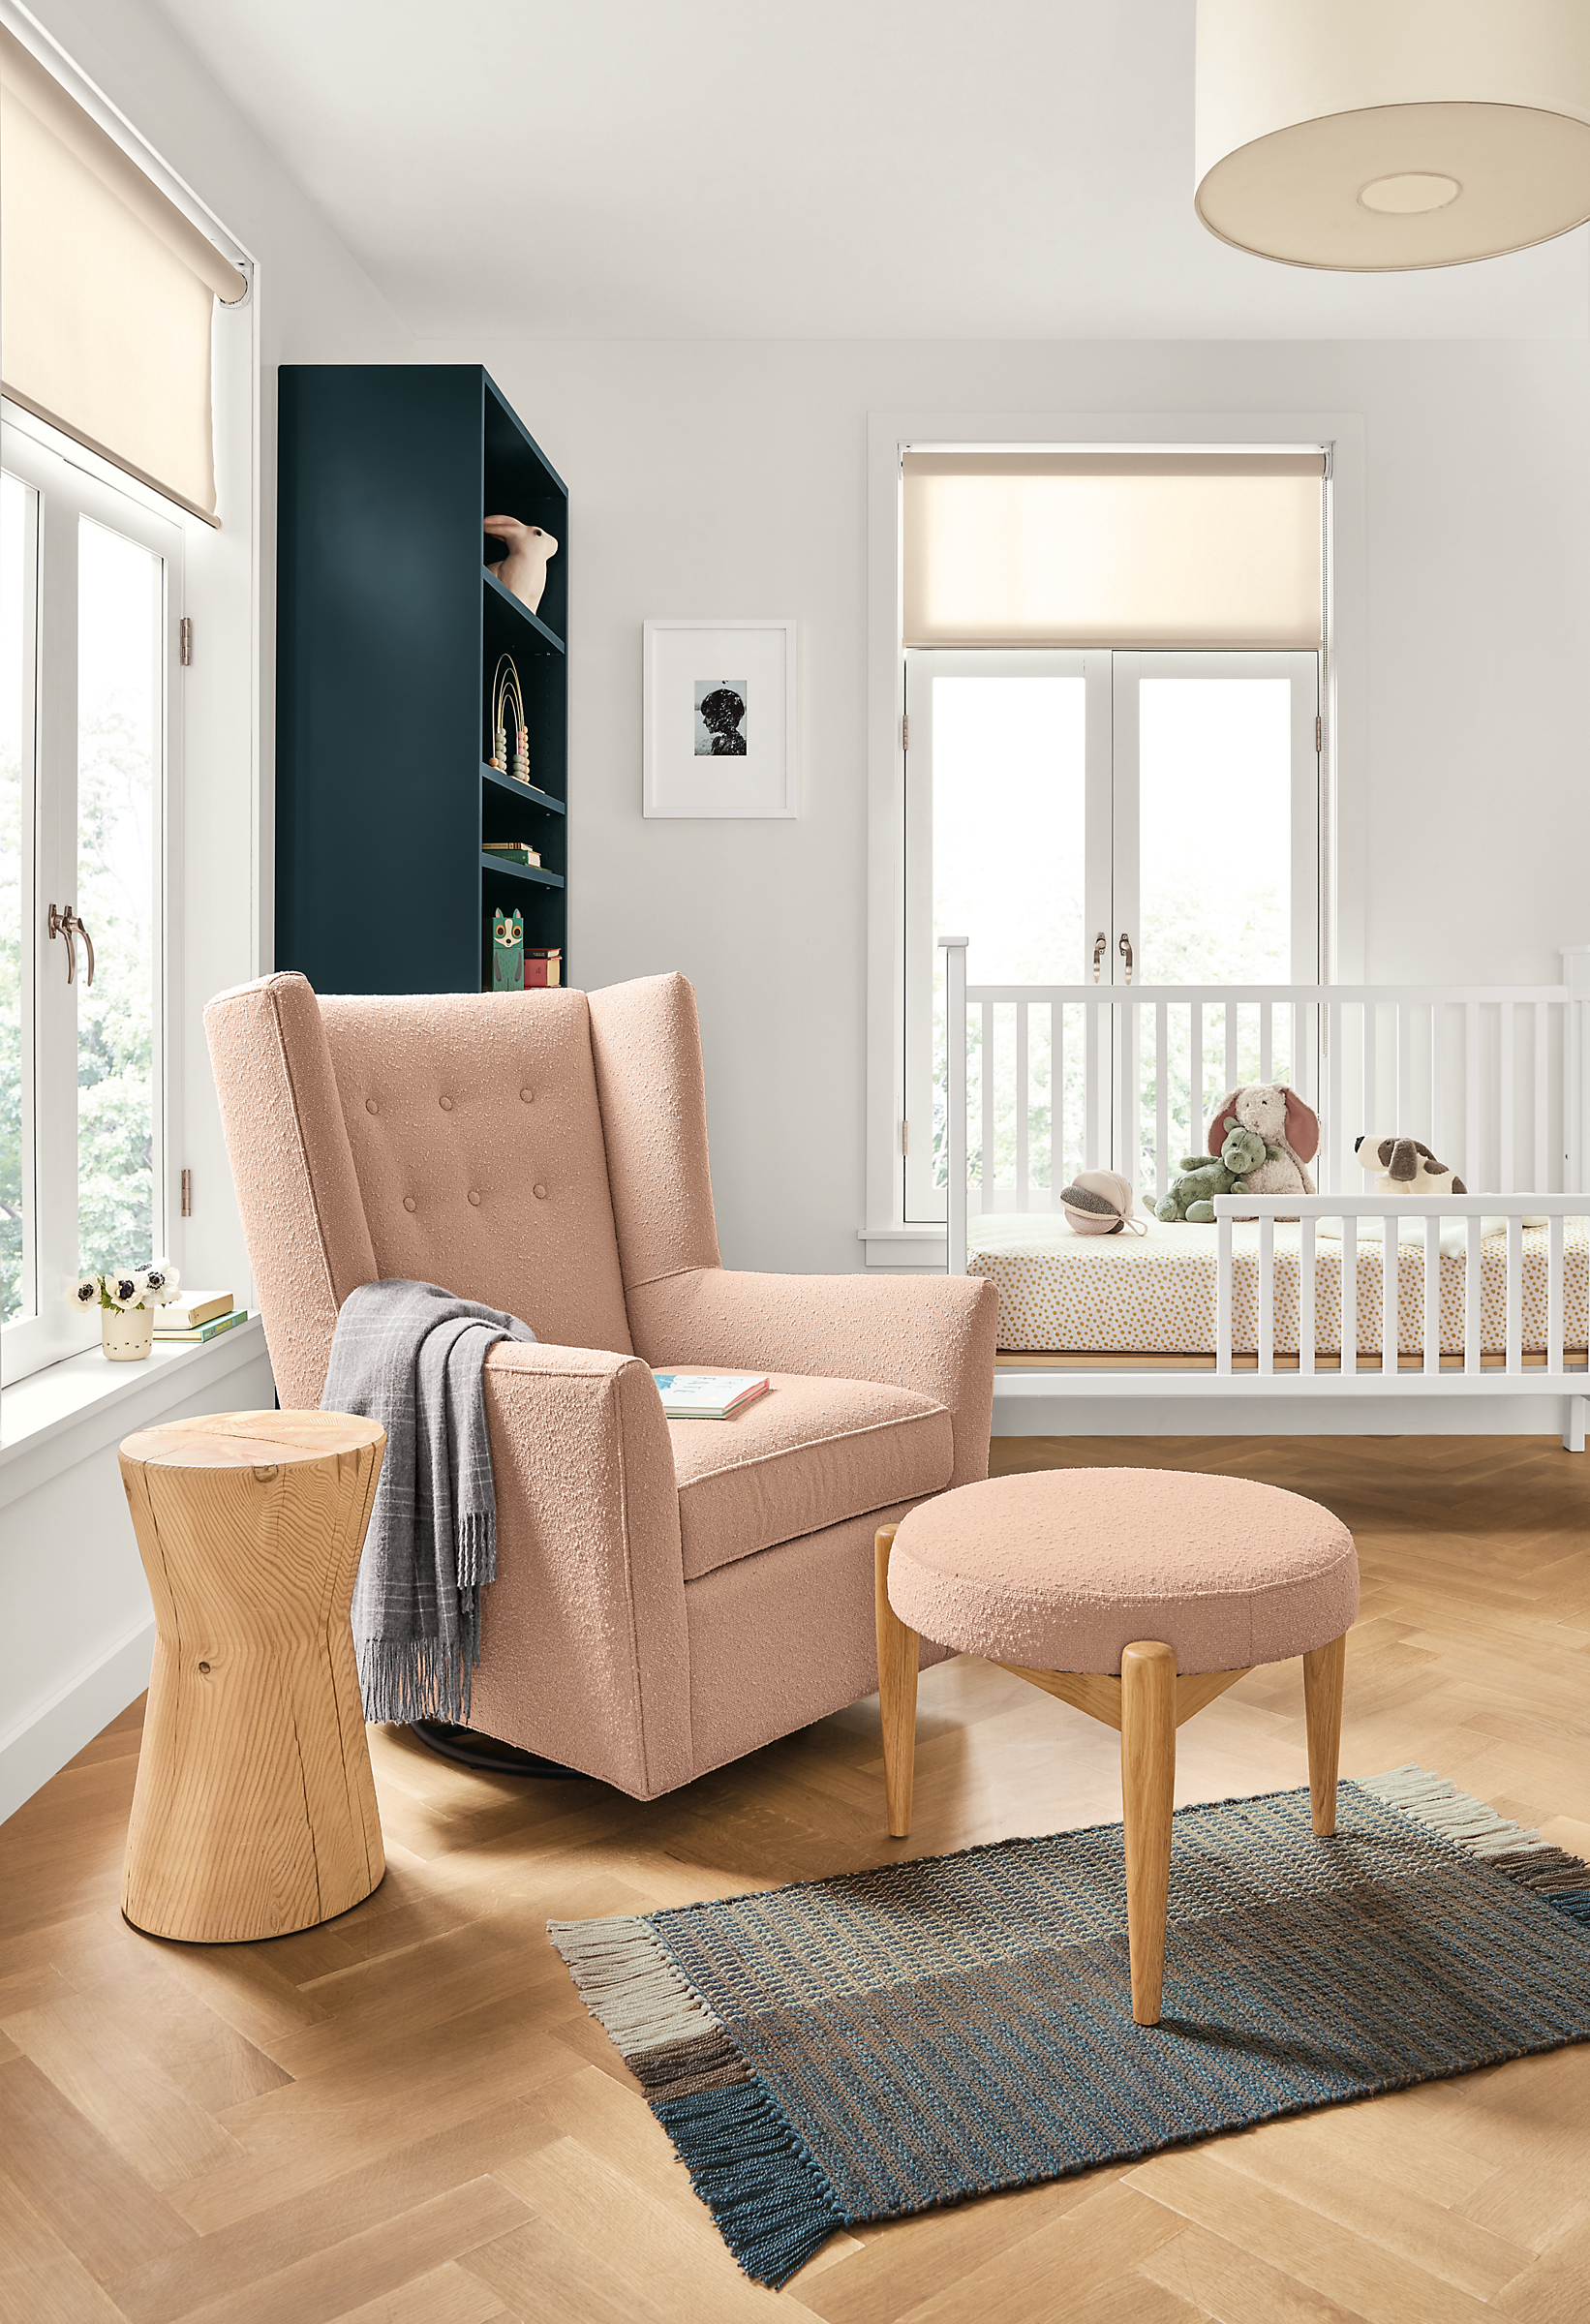 Detail of Wren swivel glider chair in Declan Blush fabric in baby's room.